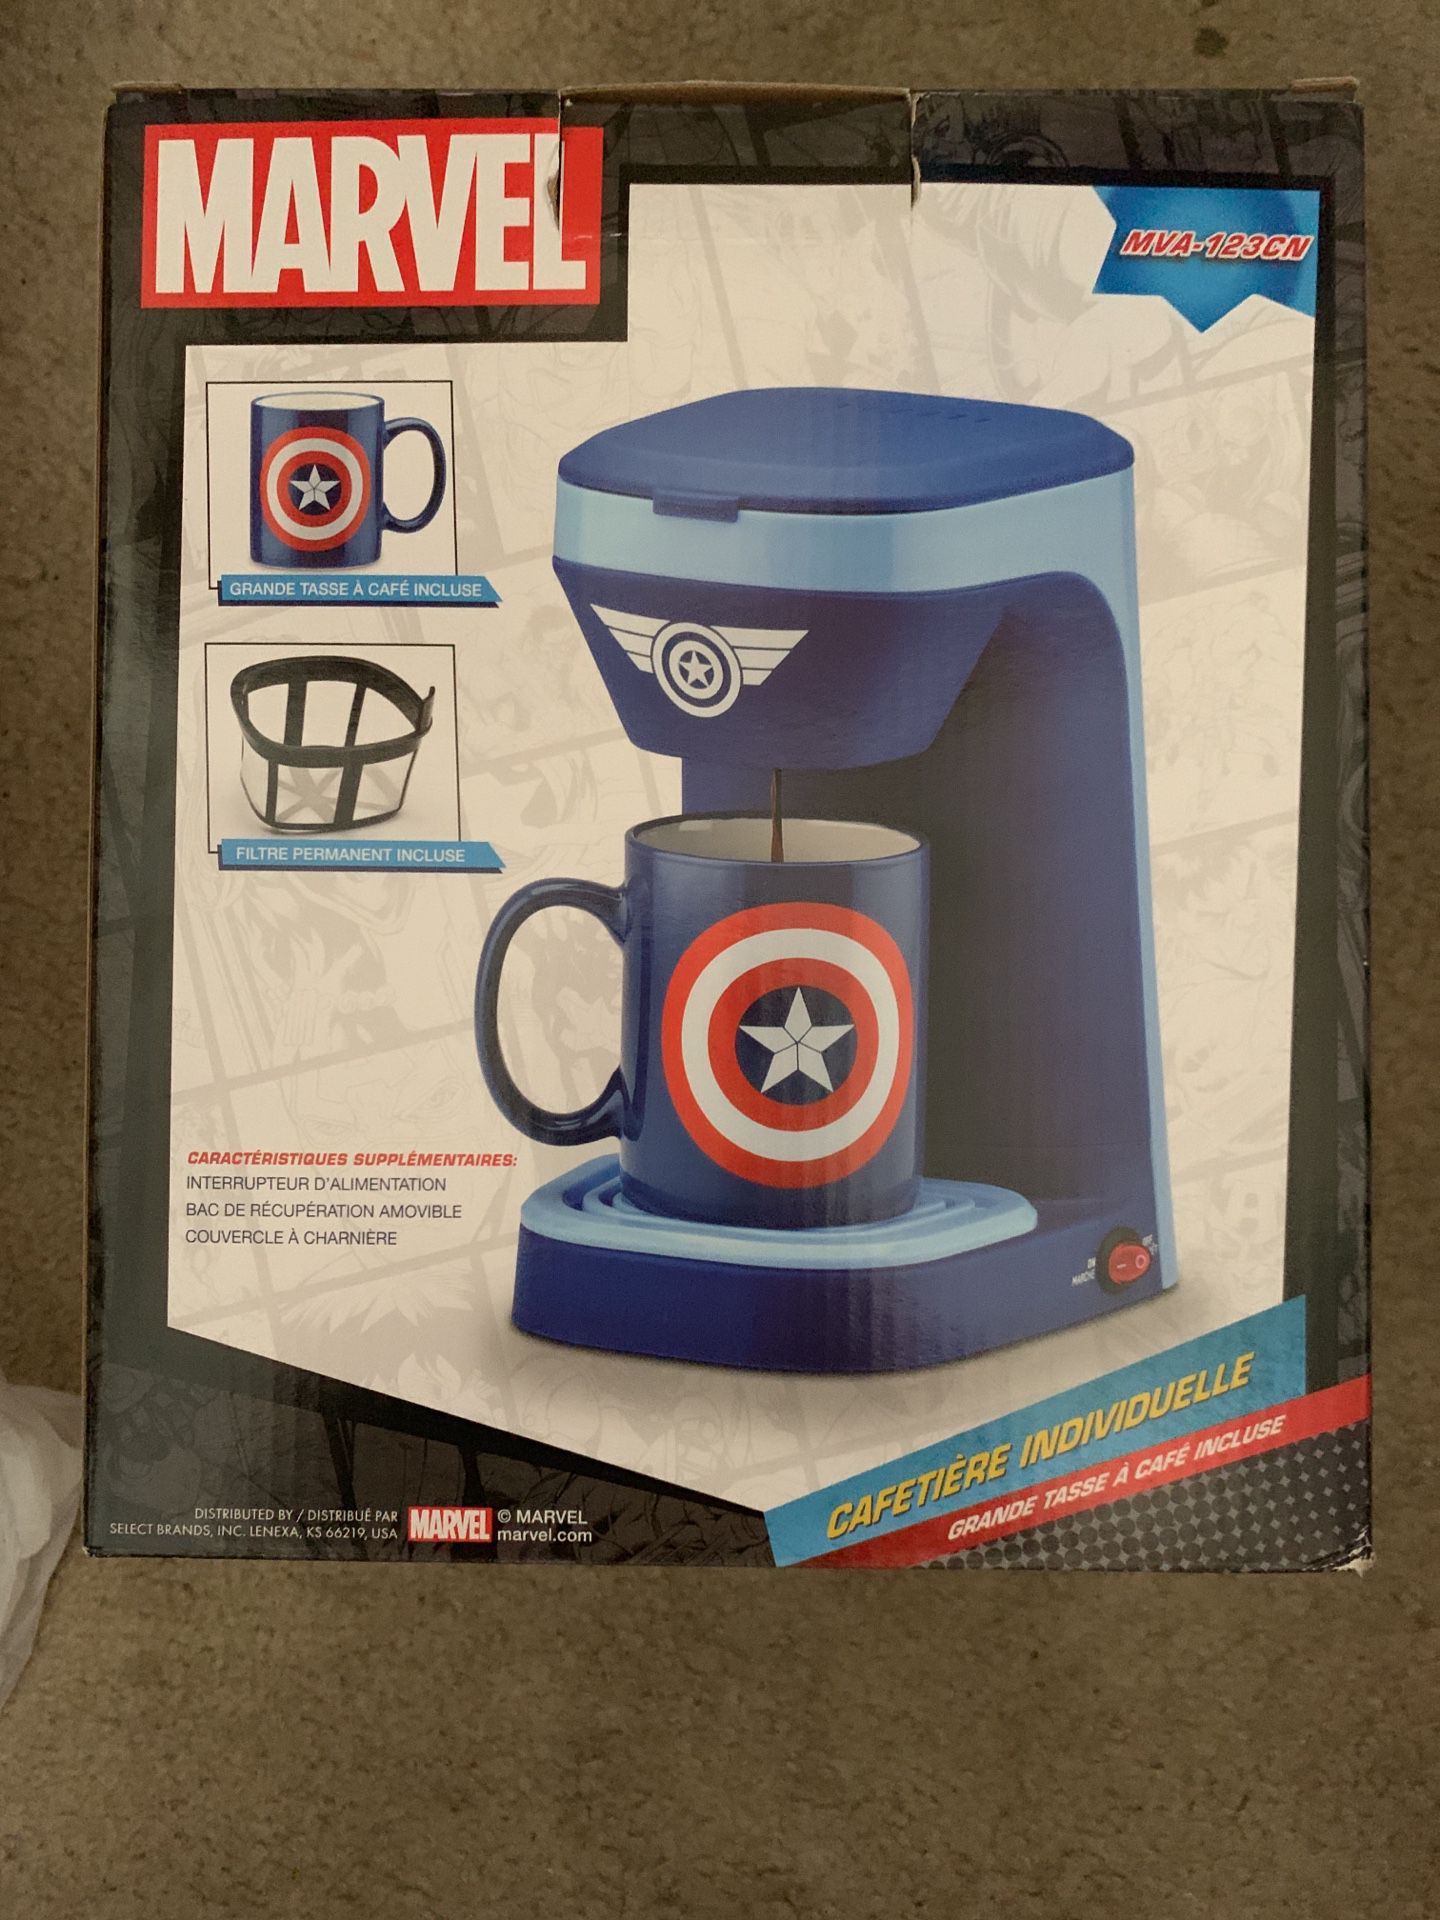 Marvel captain America coffee maker